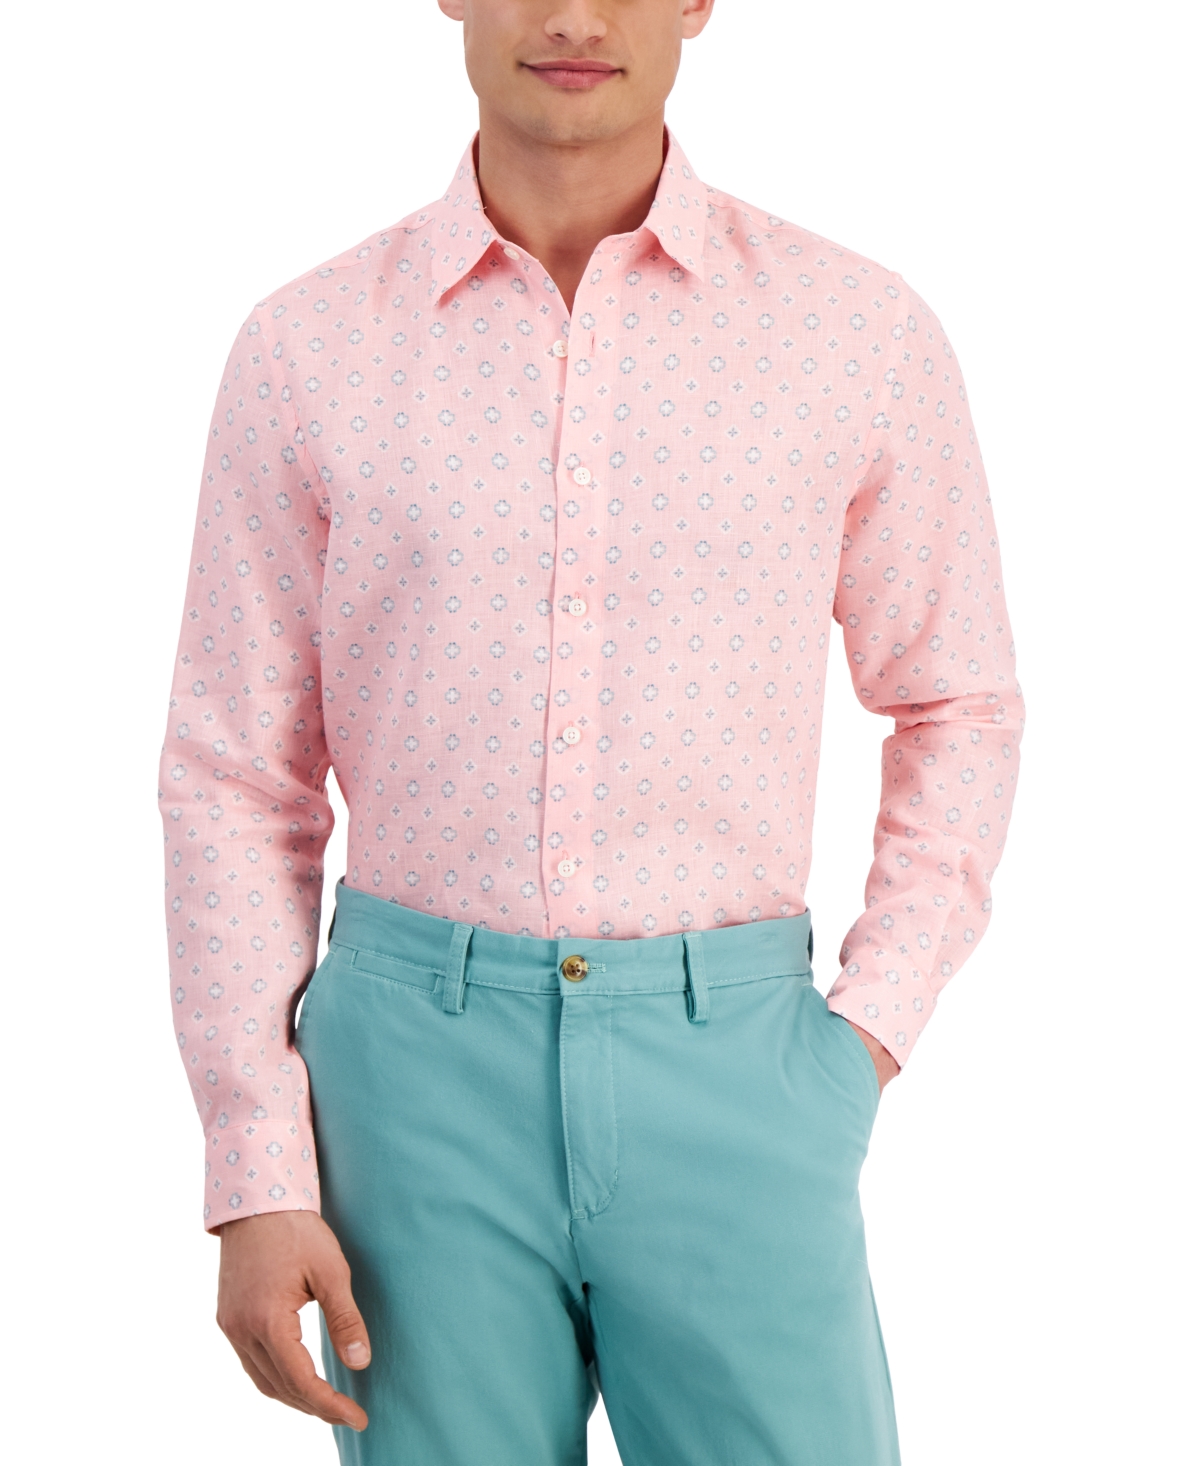 Men's Quincy Medallion-Print Linen Shirt, Created for Macy's - Pink Streak